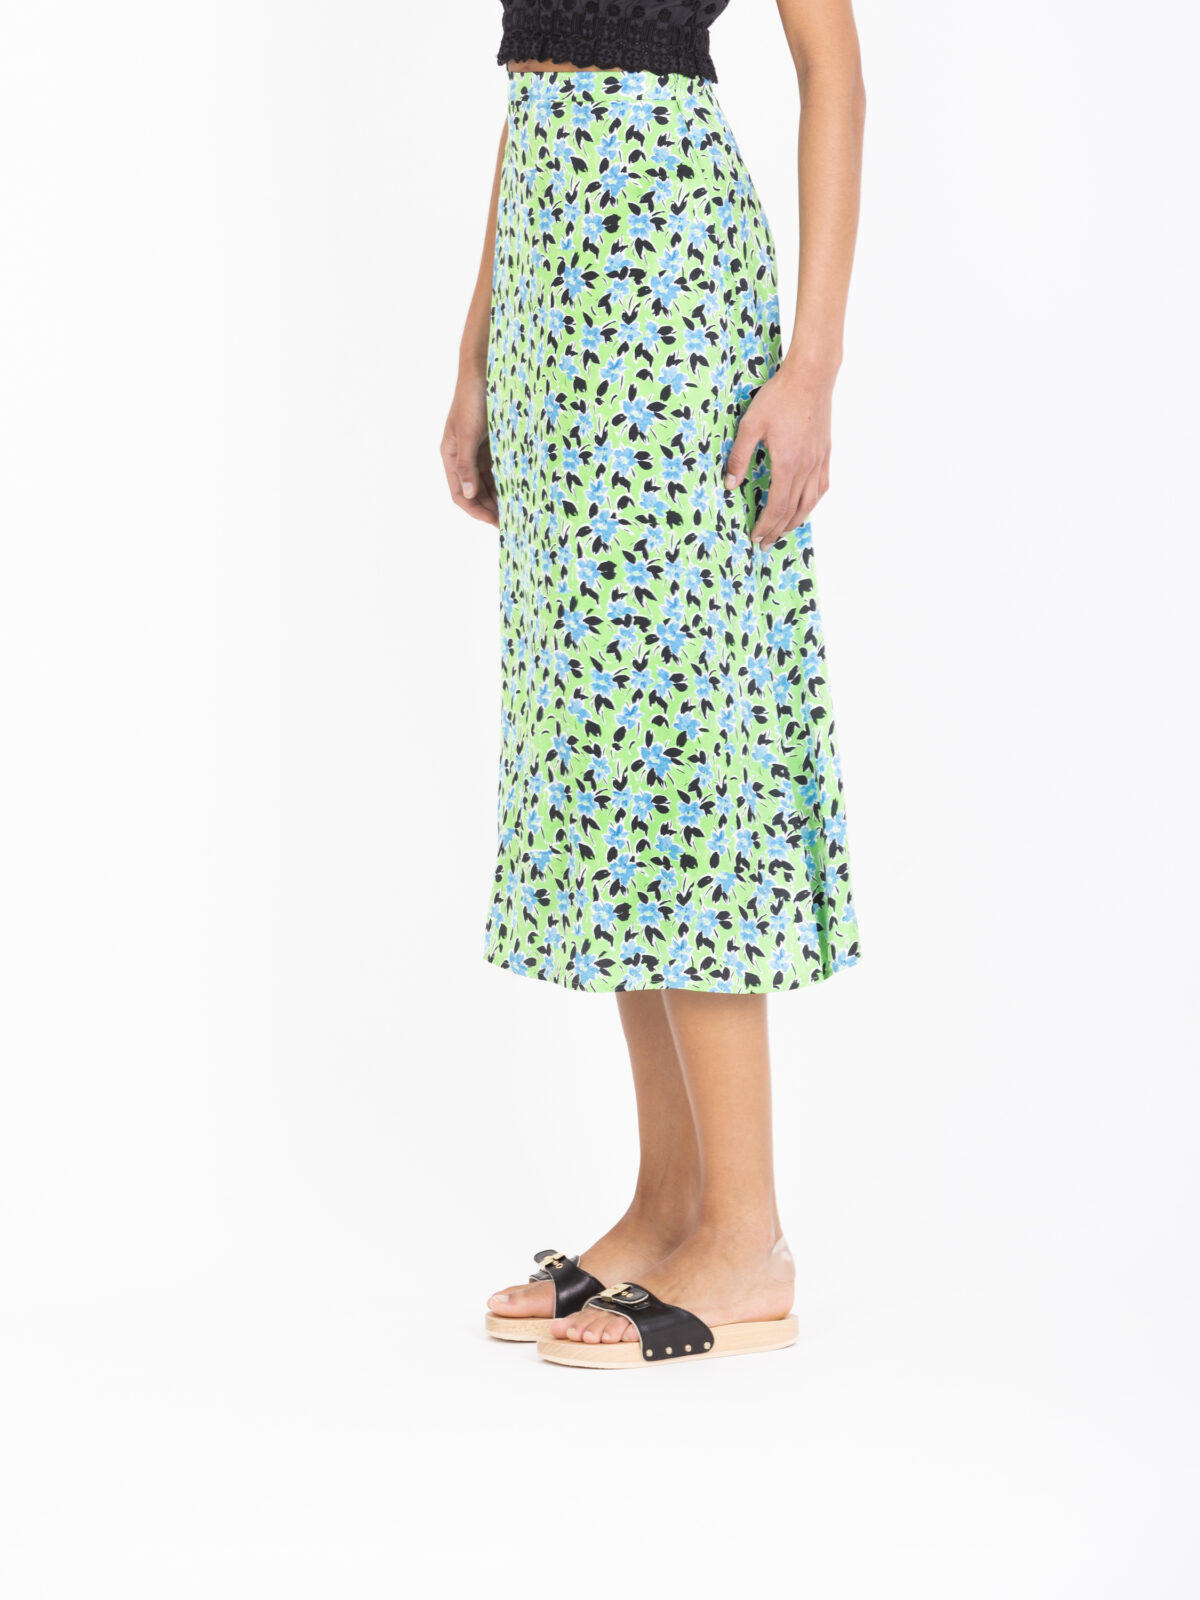 fabiola-green-skirt-floral-blue-staright-midi-viscose-suncoo-matchboxathens